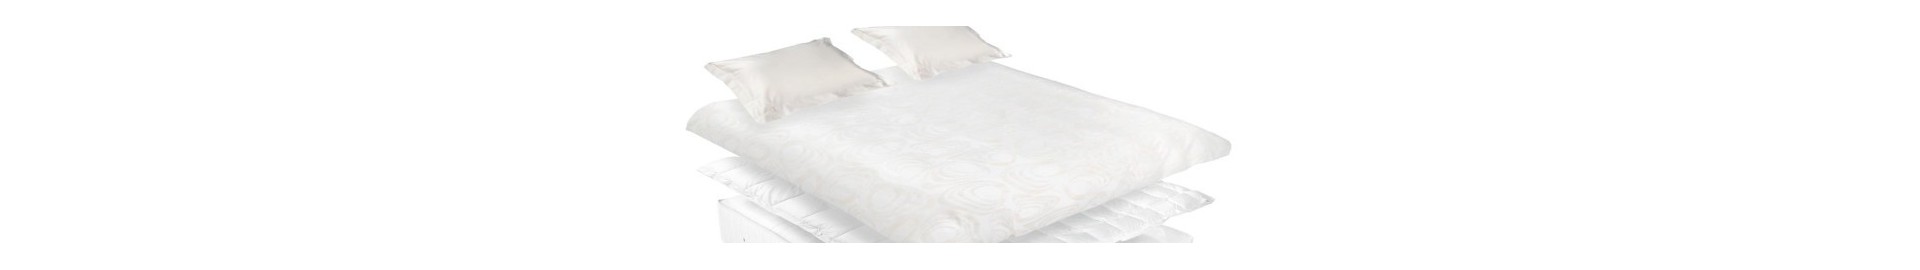 Bed Accessories online